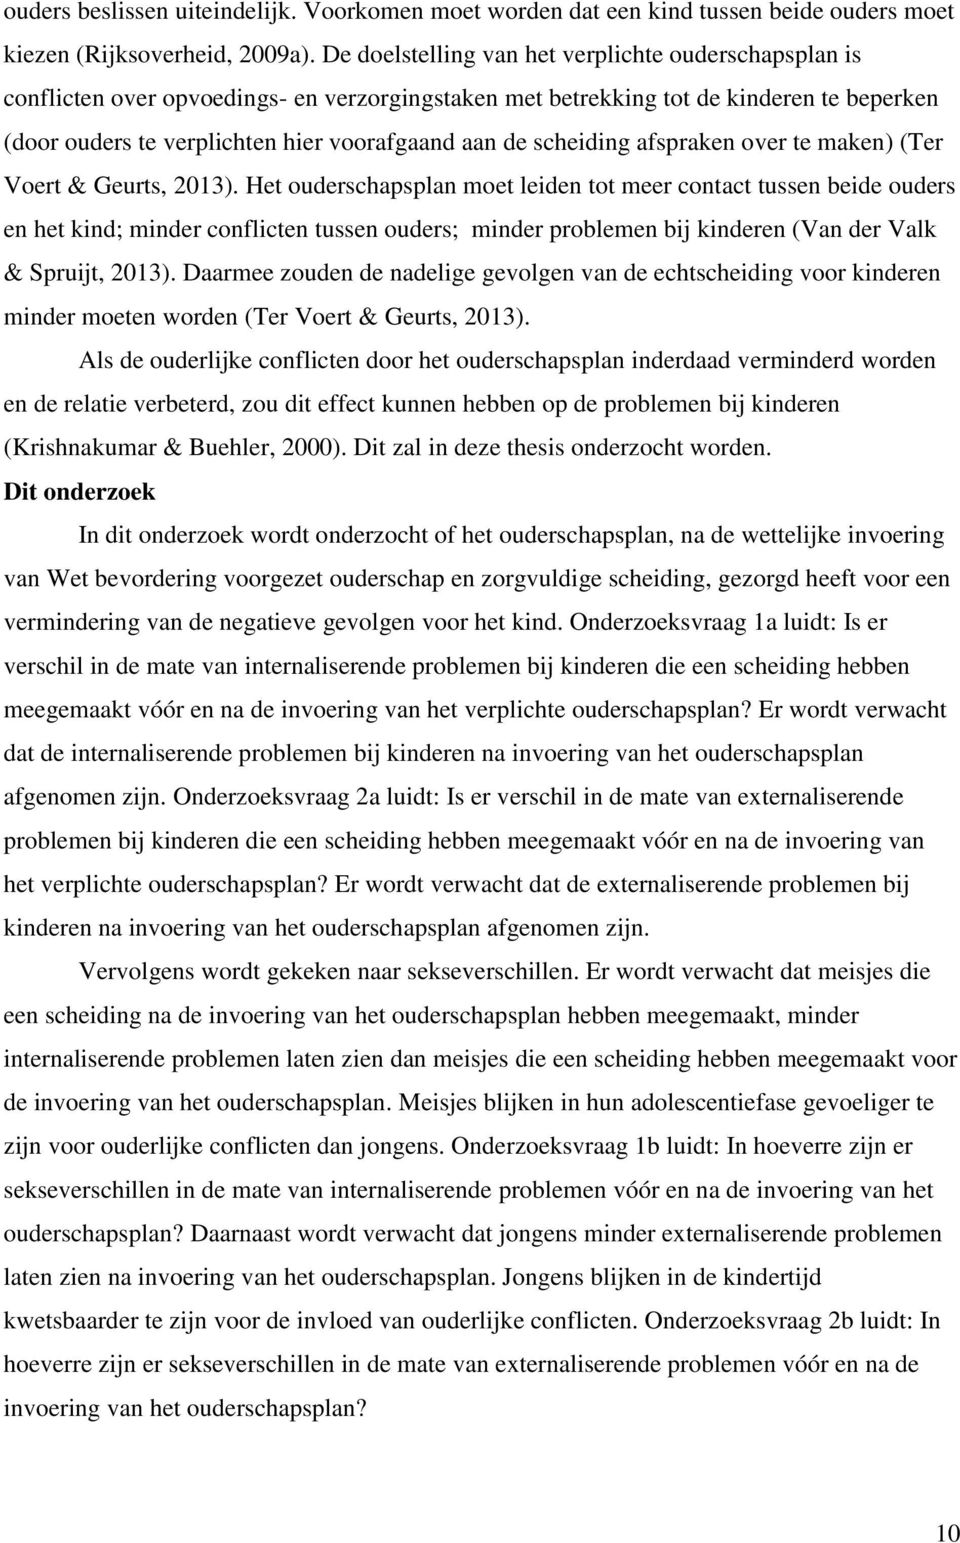 scheiding afspraken over te maken) (Ter Voert & Geurts, 2013).